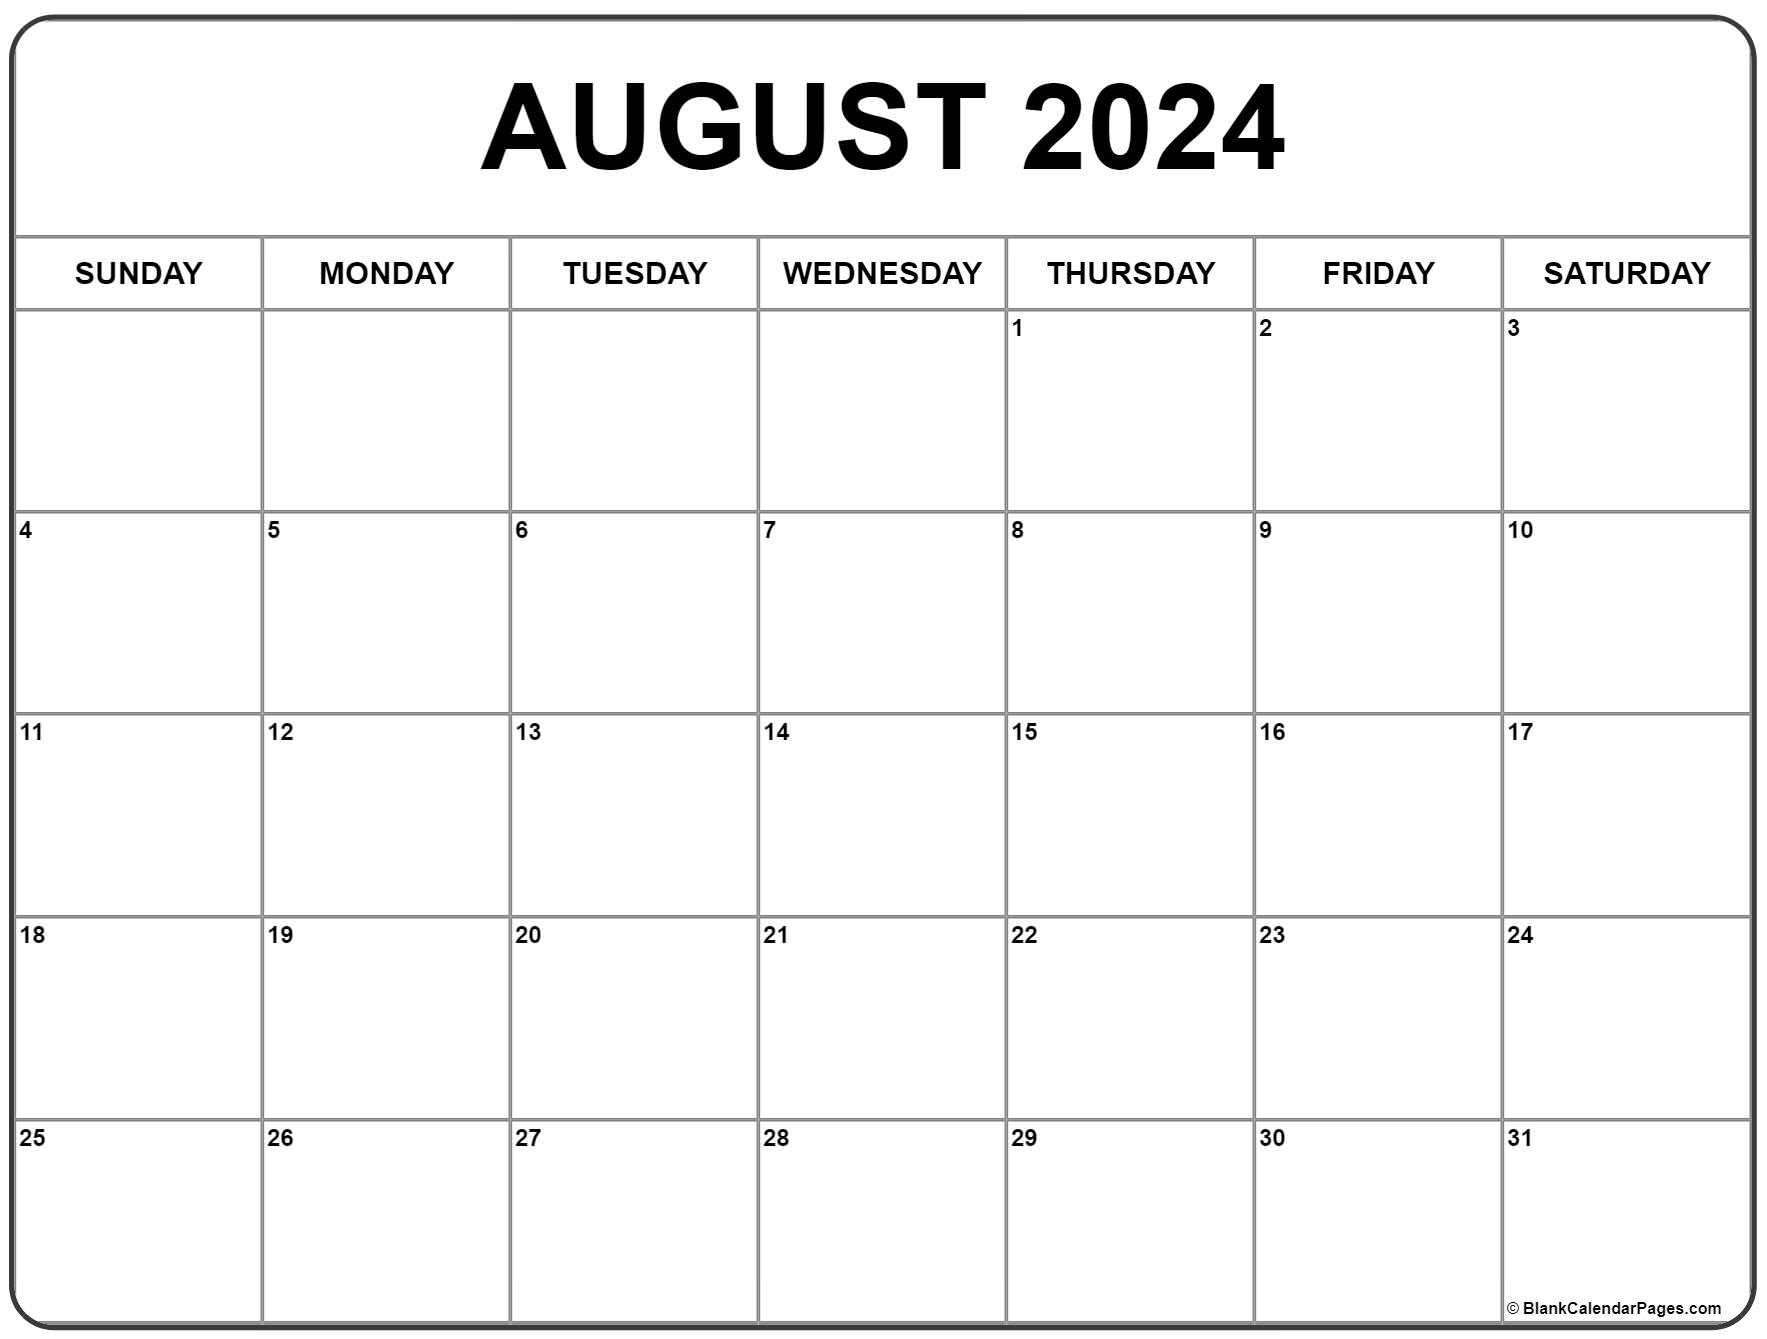 August 2024 Calendar | Free Printable Calendar for Printable Calendar August 2024 To June 2024